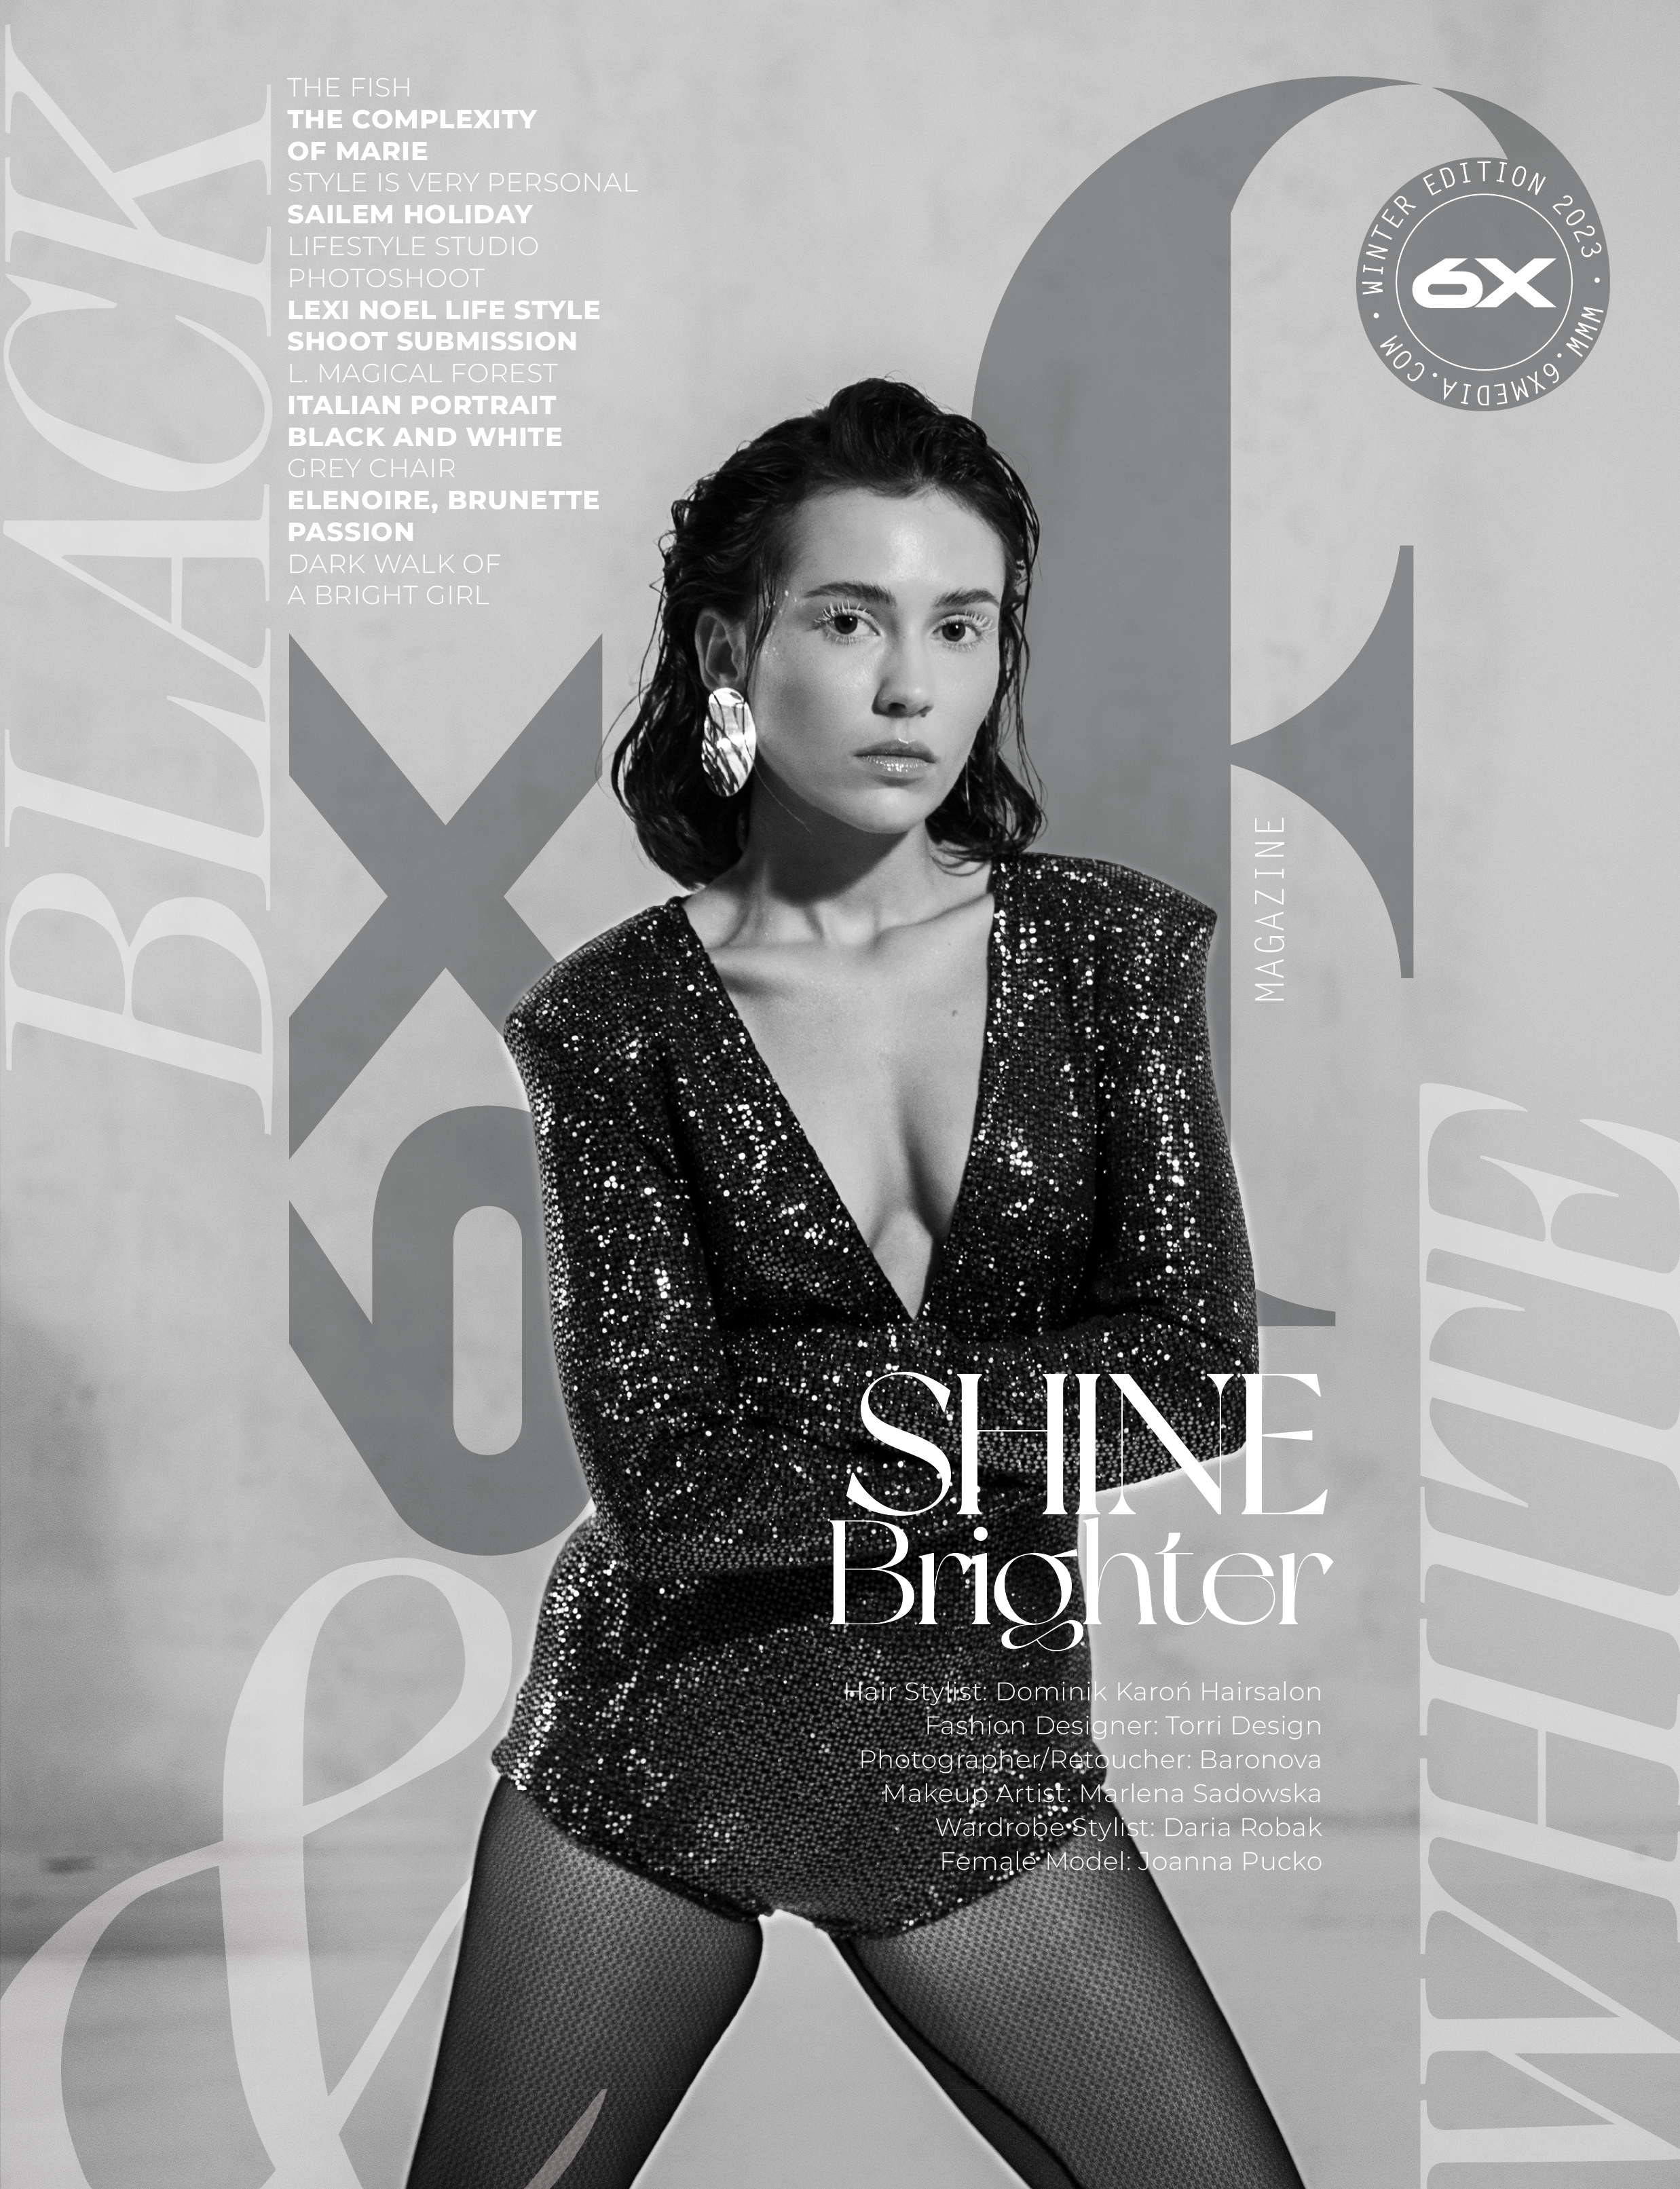 My body on 6XF magazine's cover